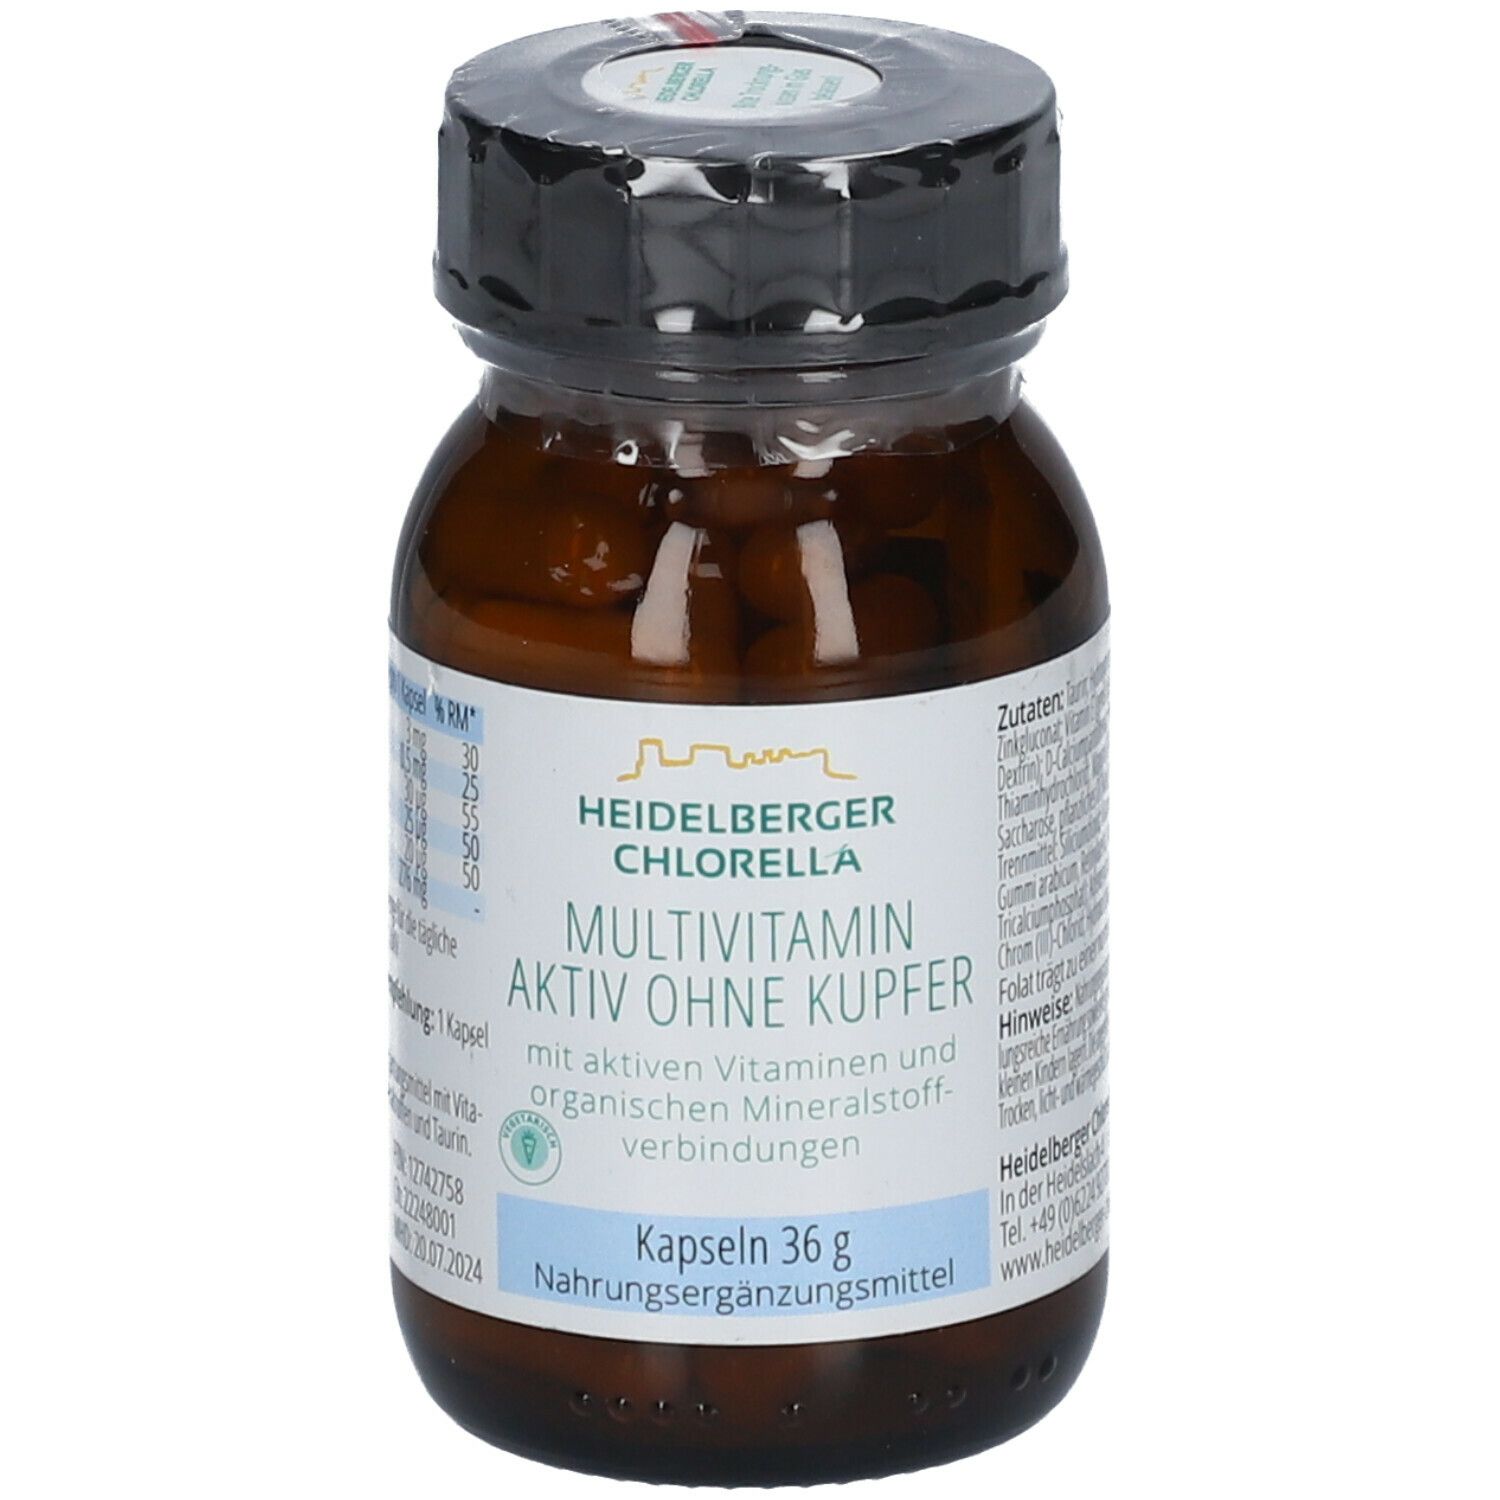 Heidelberger Chlorella® Multivitamin Aktiv ohne Kupfer